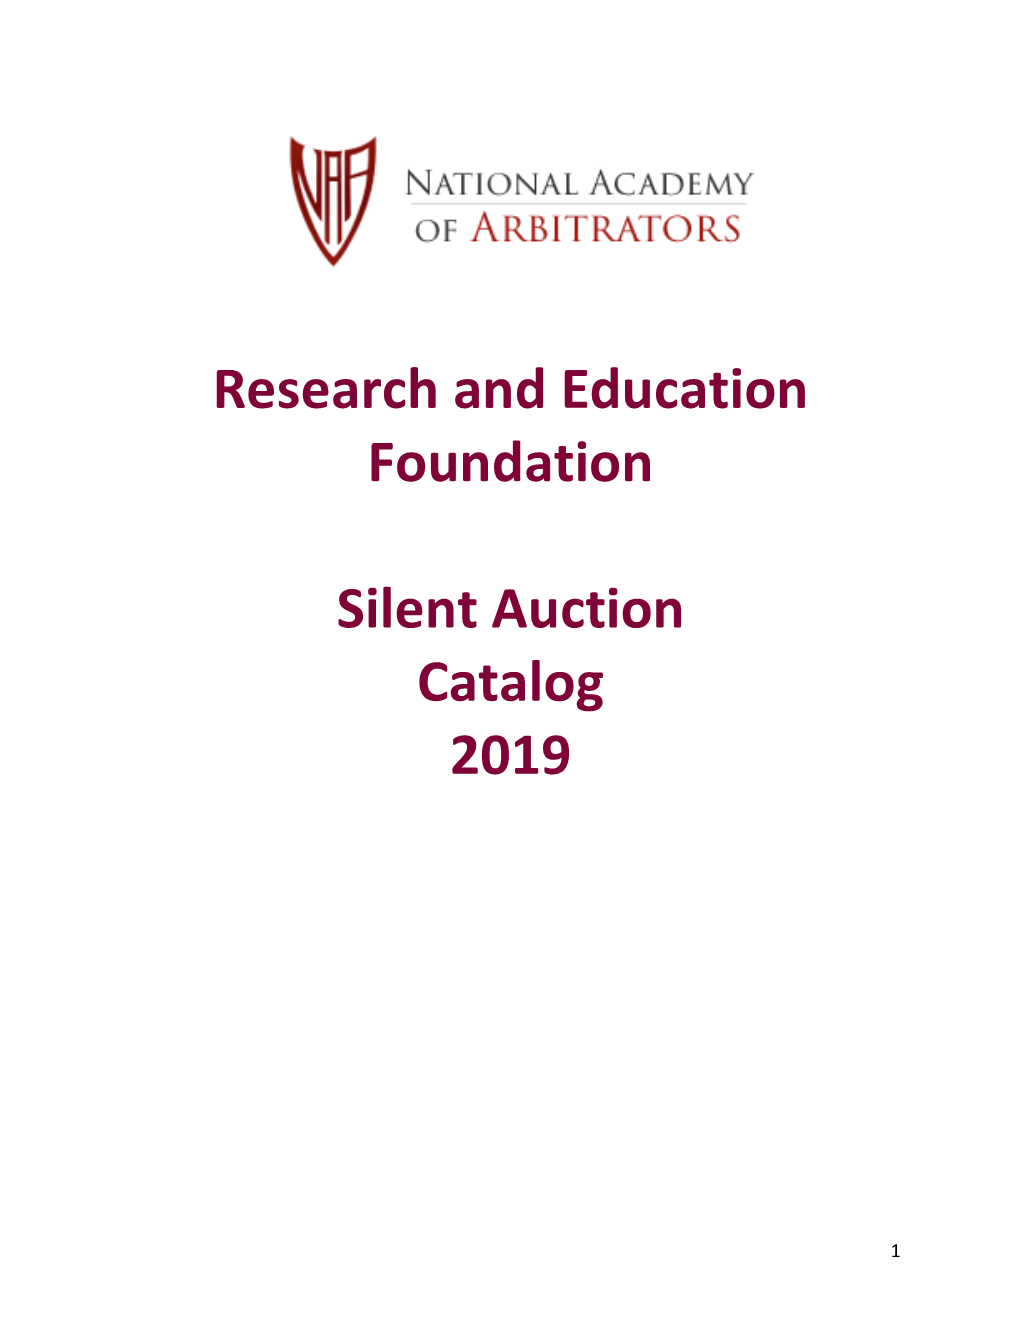 REF Silent Auction Catalog